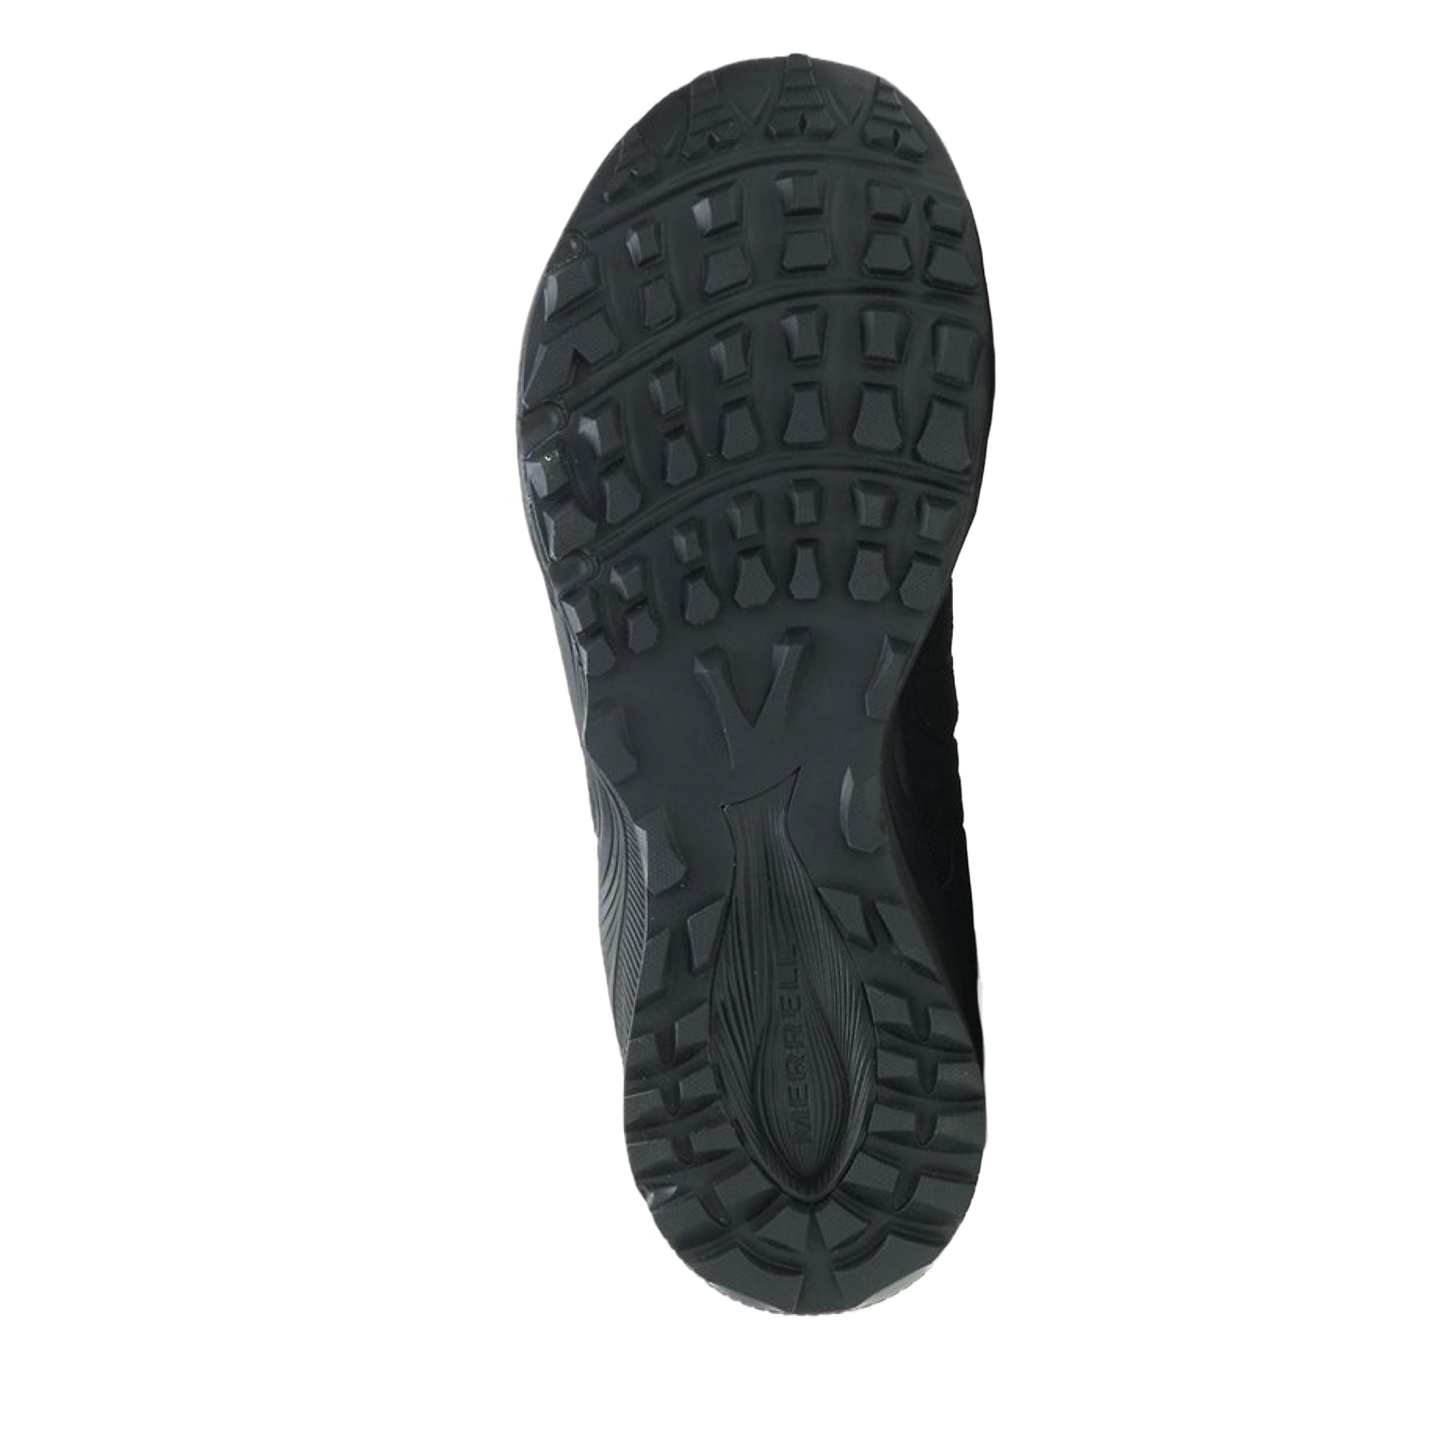 Merrell® Men's Agility Peak Tactical Black Shoes J17763